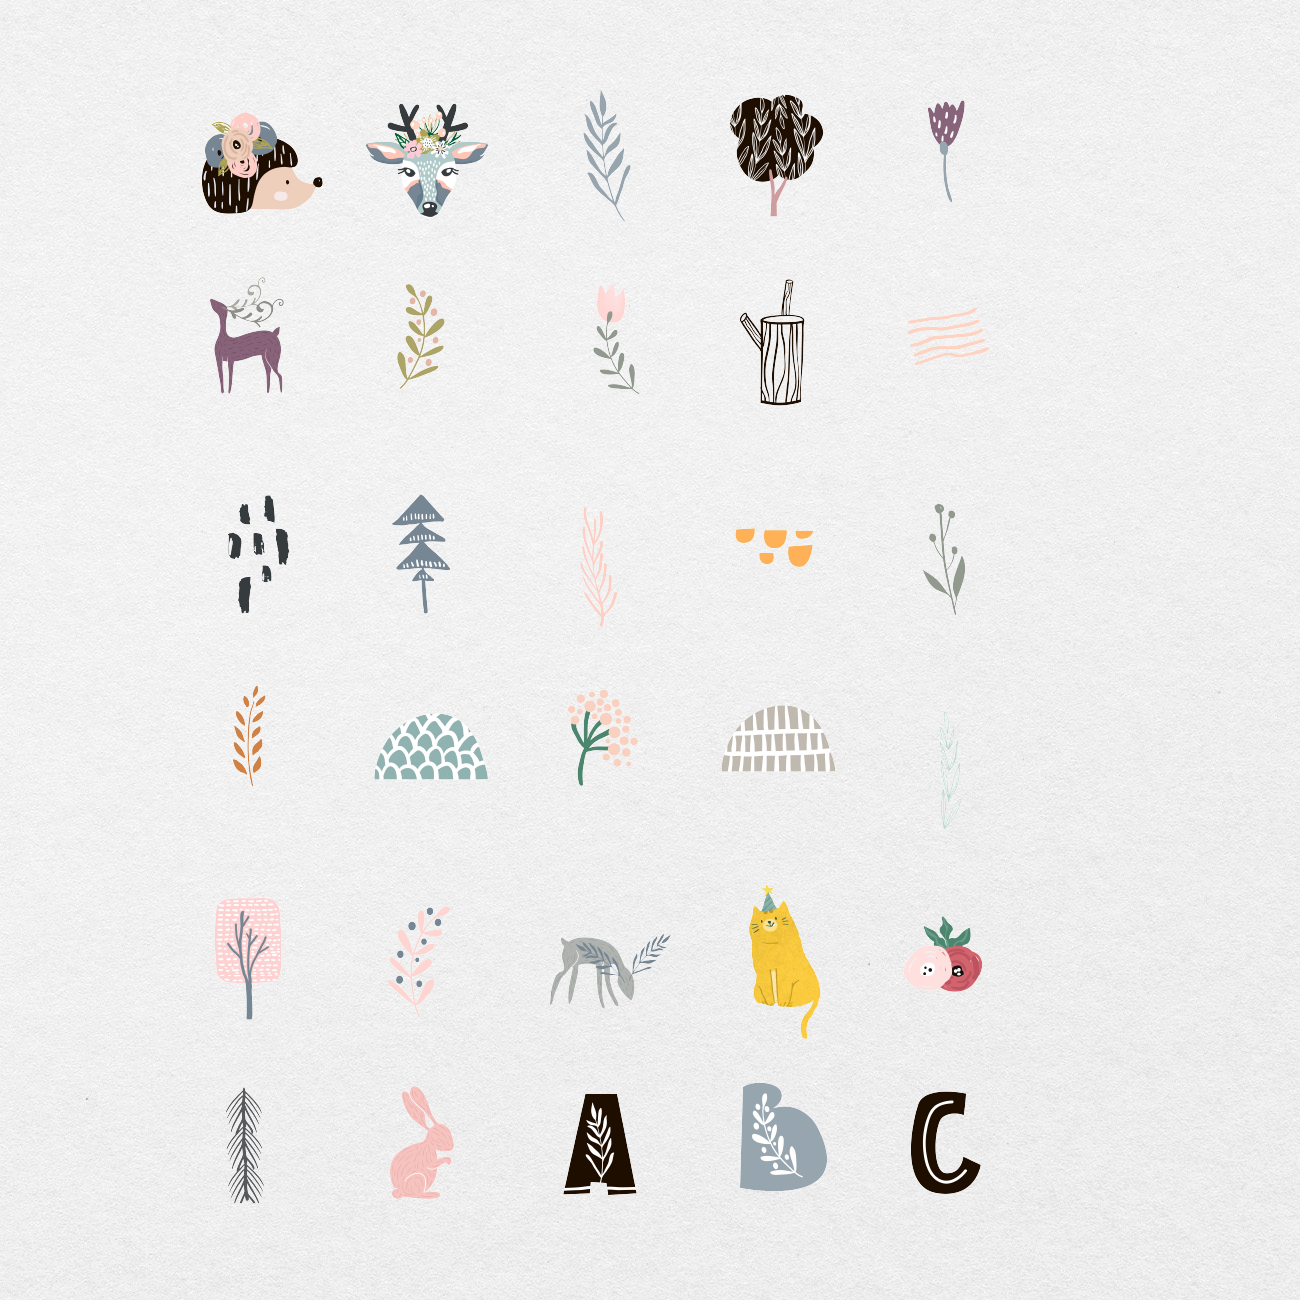 98 Digital Cute Forest Animal Sticker Bundle - Stationery Pal